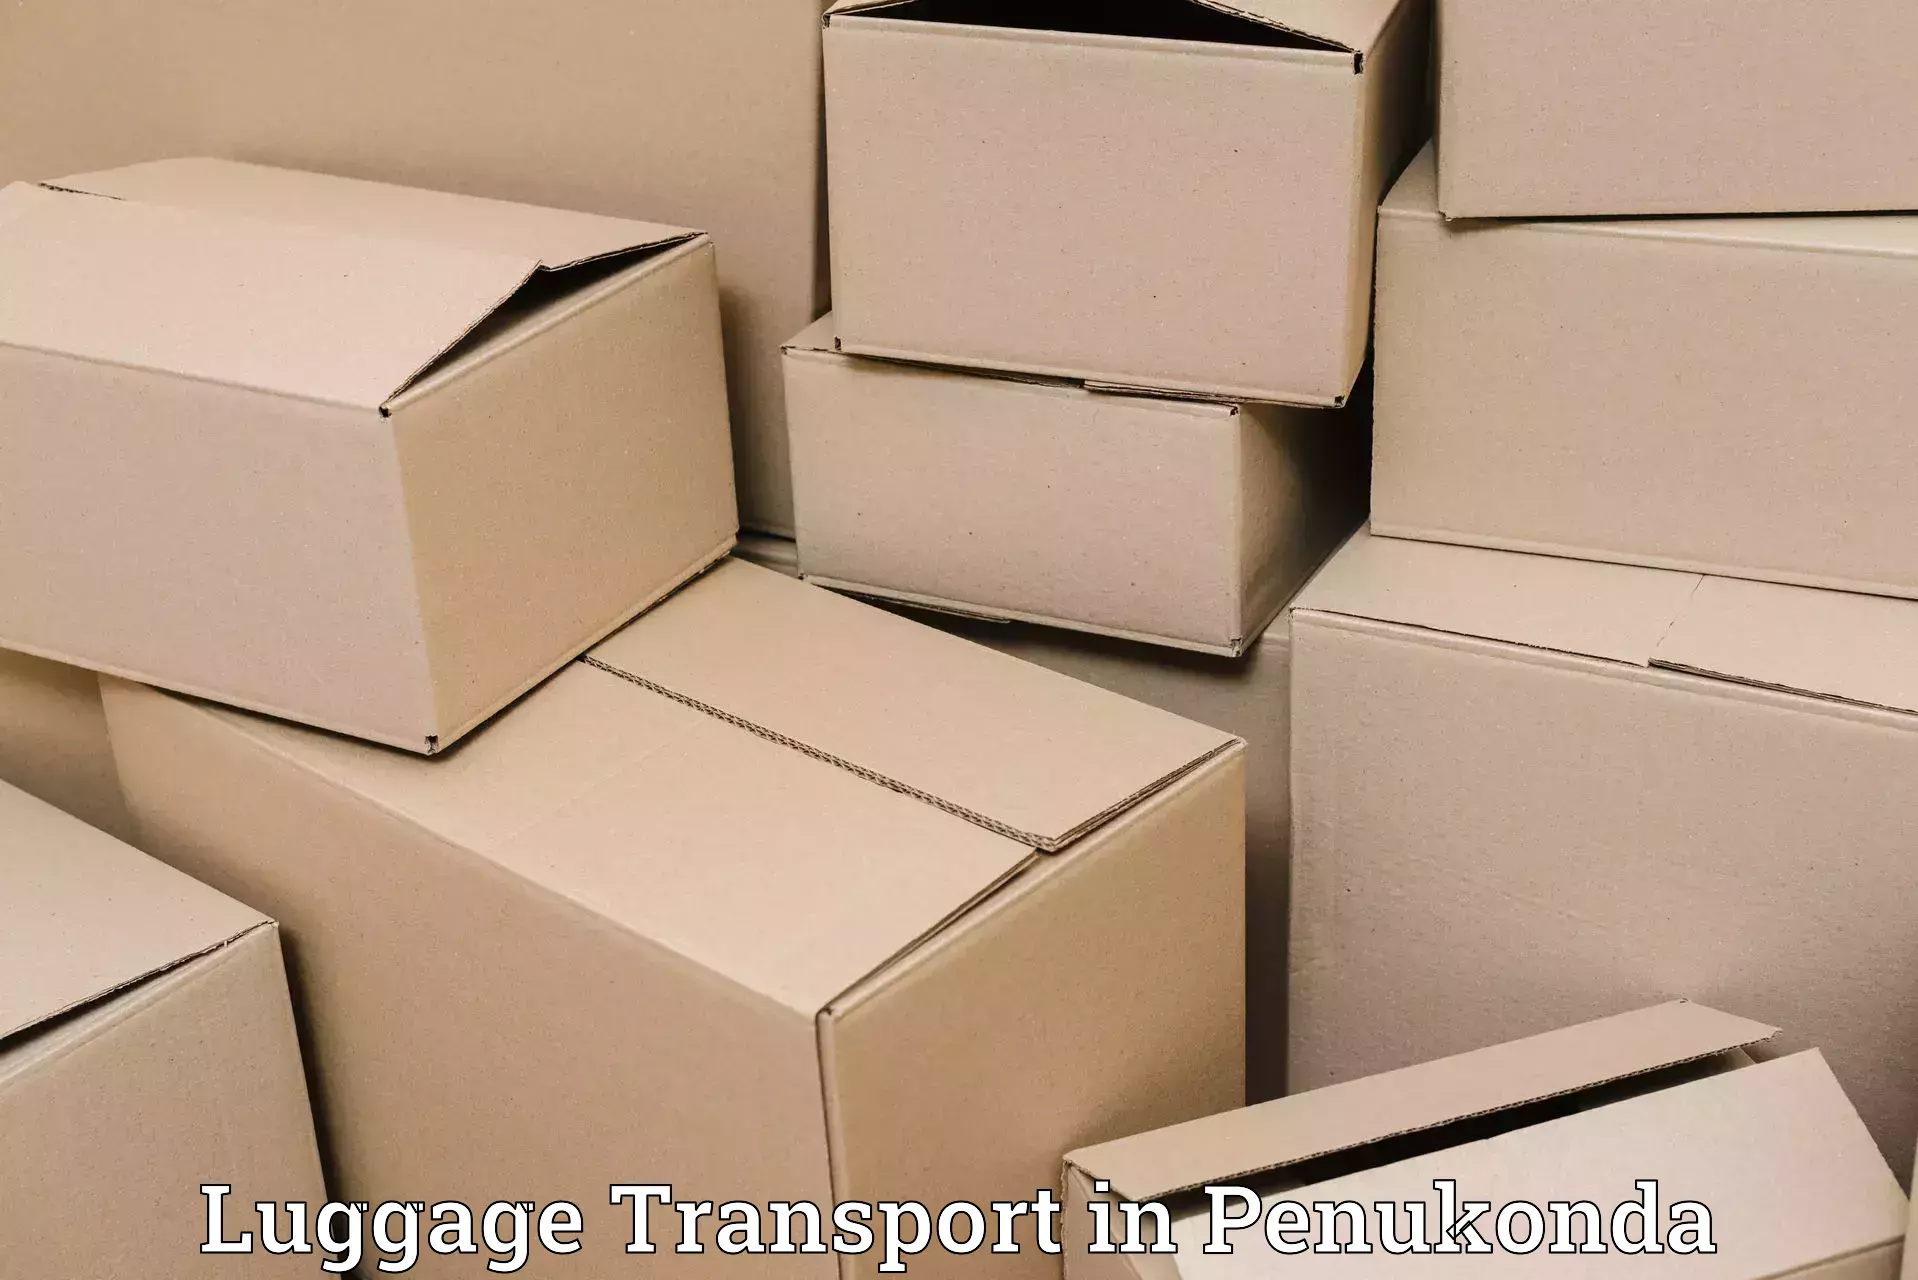 Multi-destination luggage transport in Penukonda